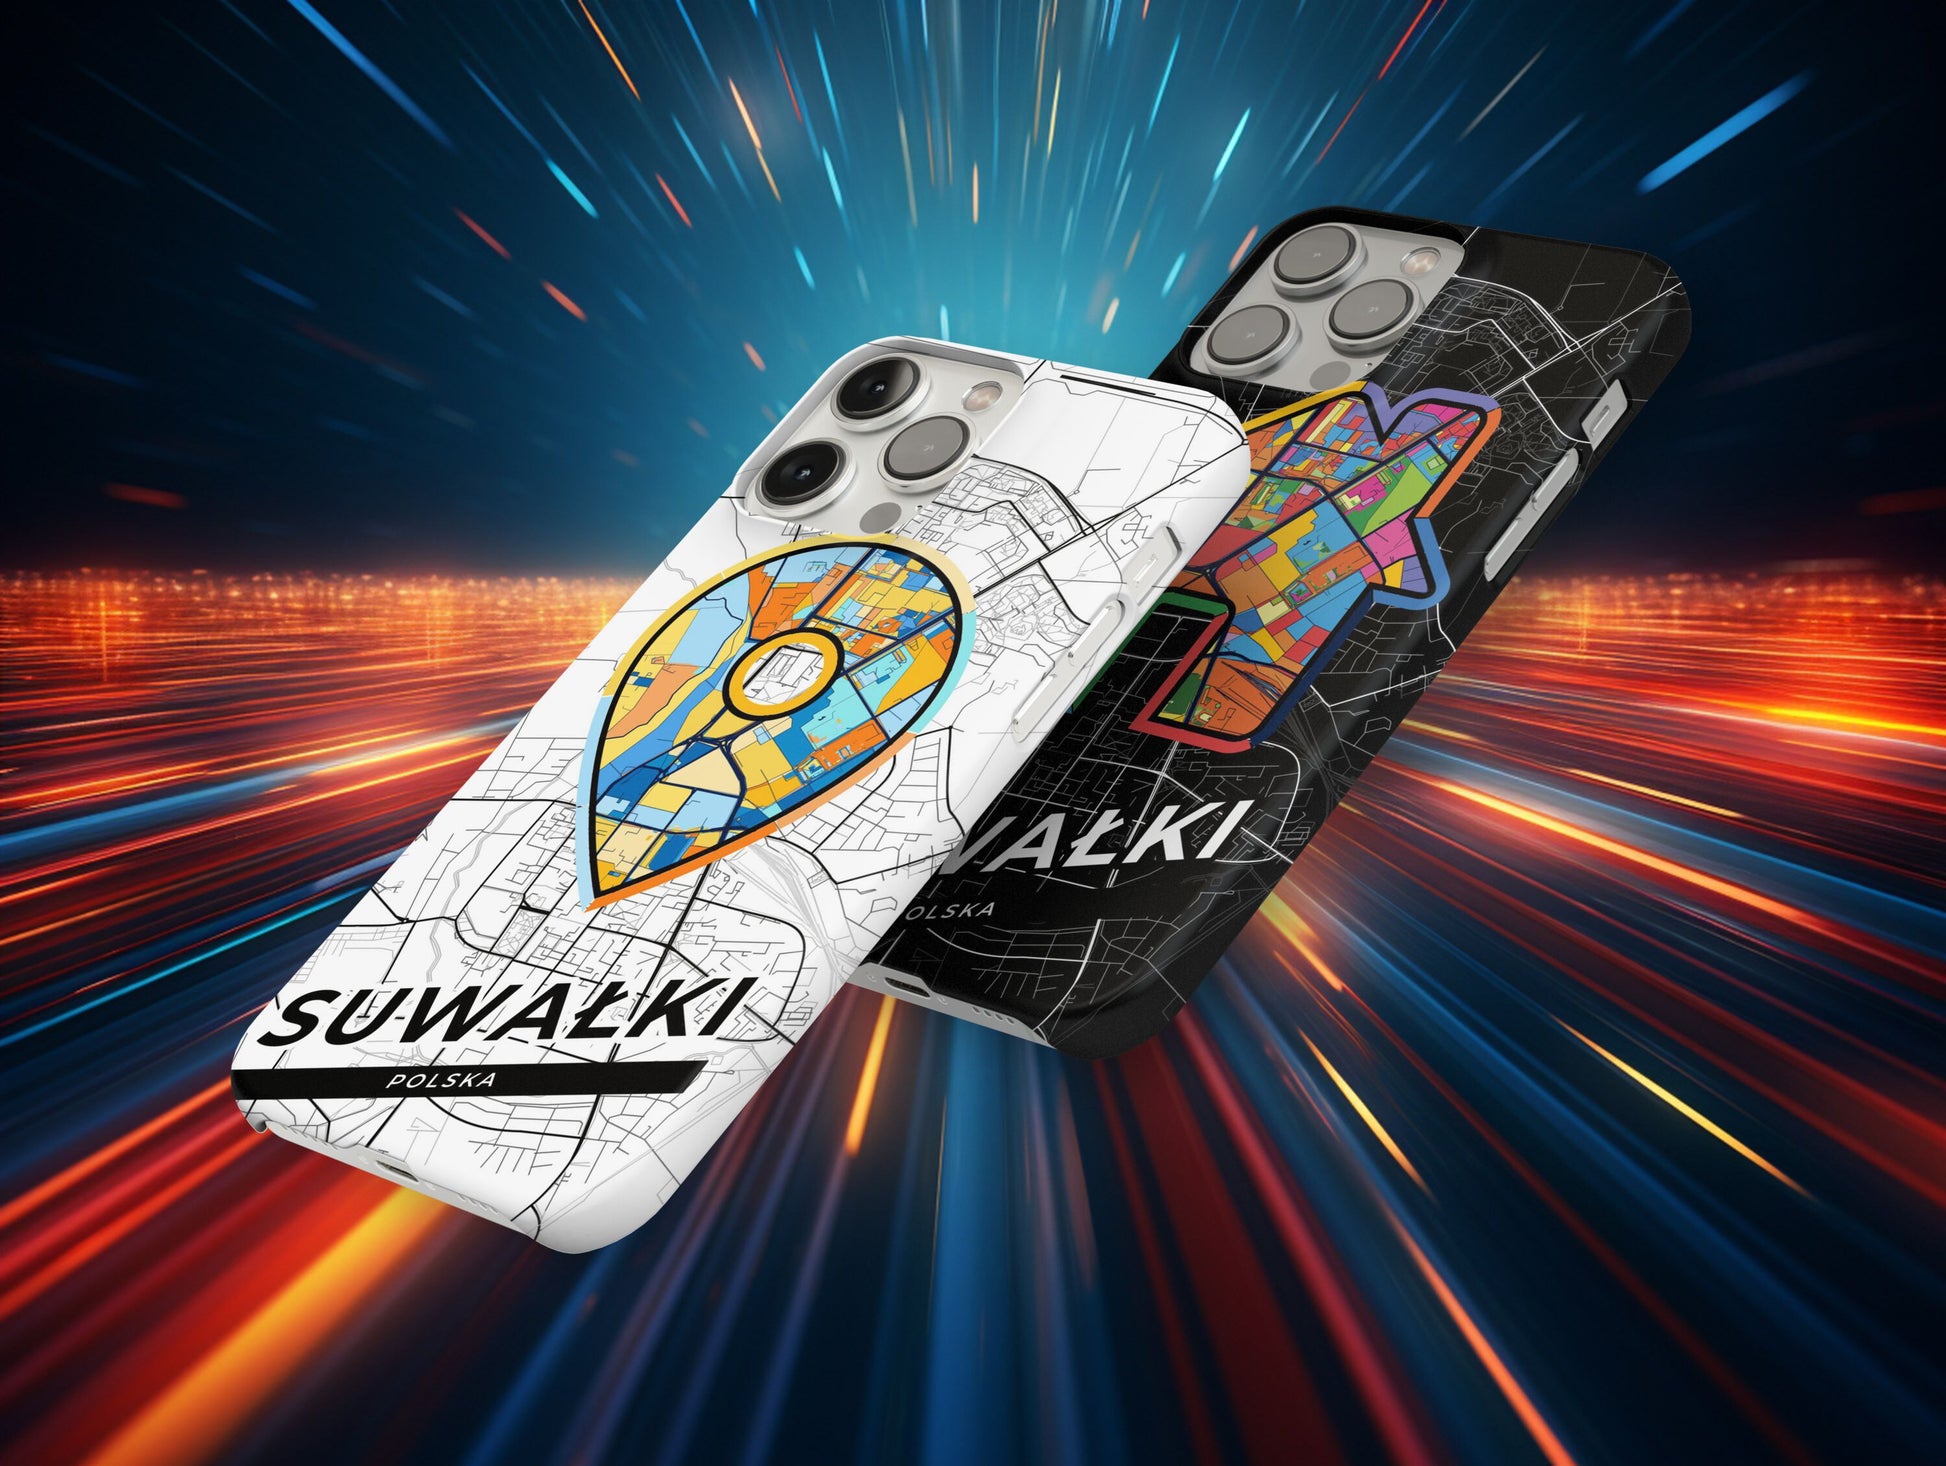 Suwałki Poland slim phone case with colorful icon